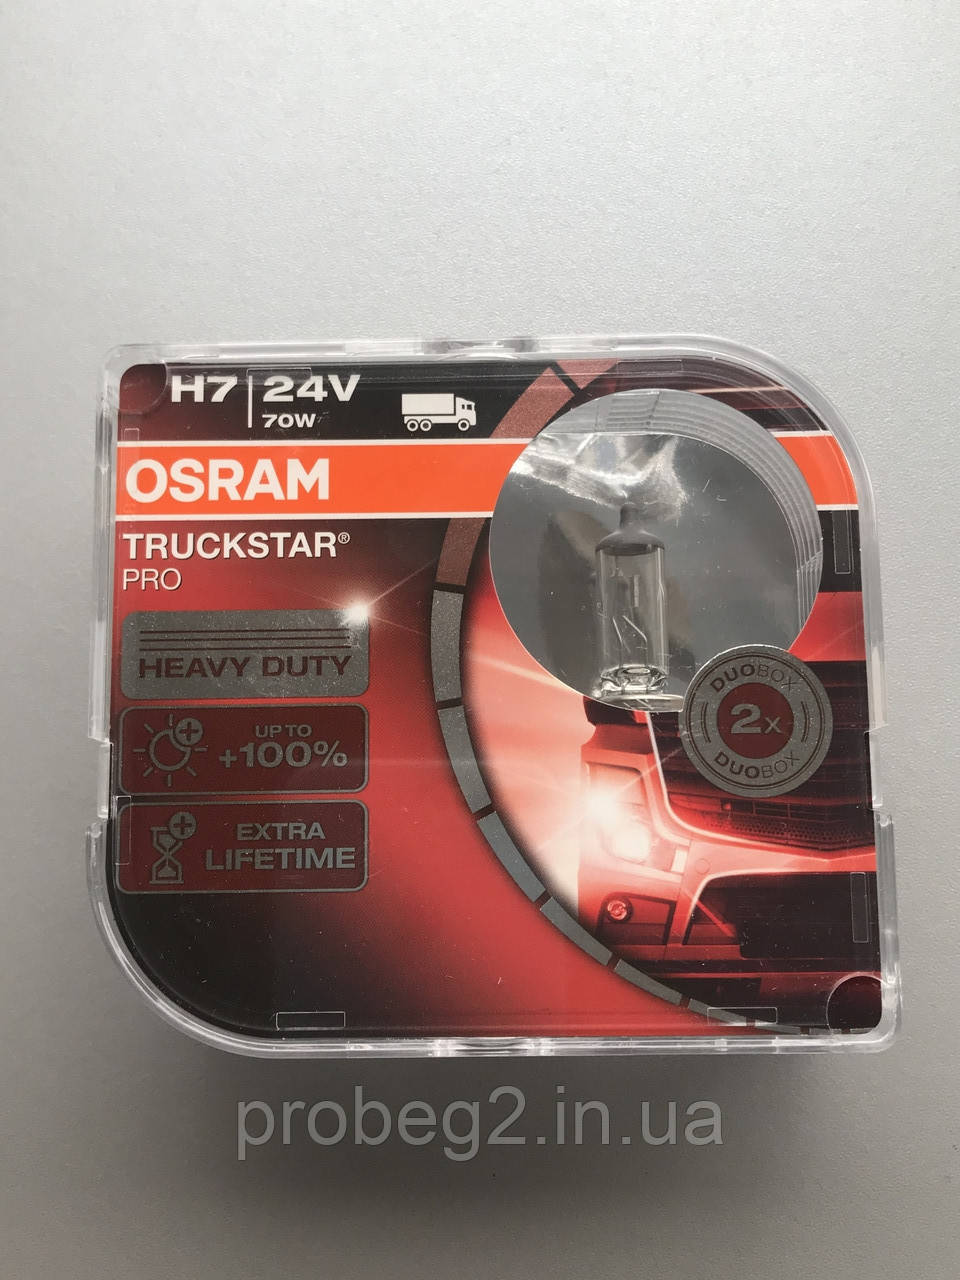 лампи галогенні OSRAM H7+100% 24V 70W 64215 TSP-HCB, фото 1